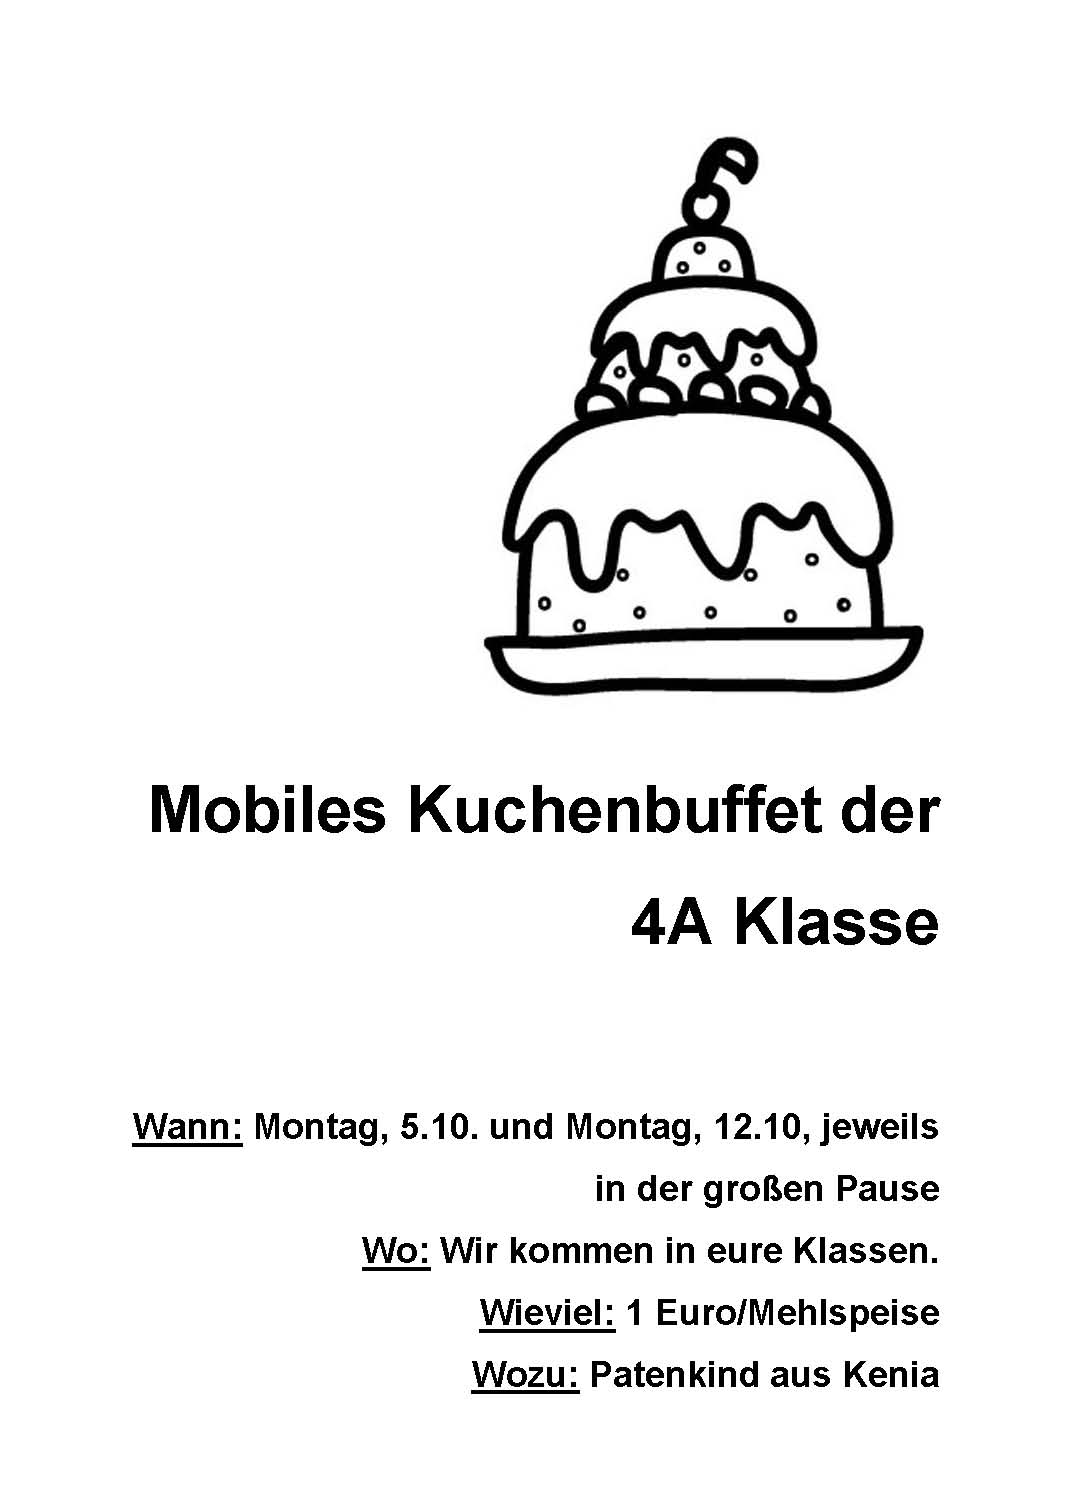 Mobiles Kuchenbuffet der 4A Klasse